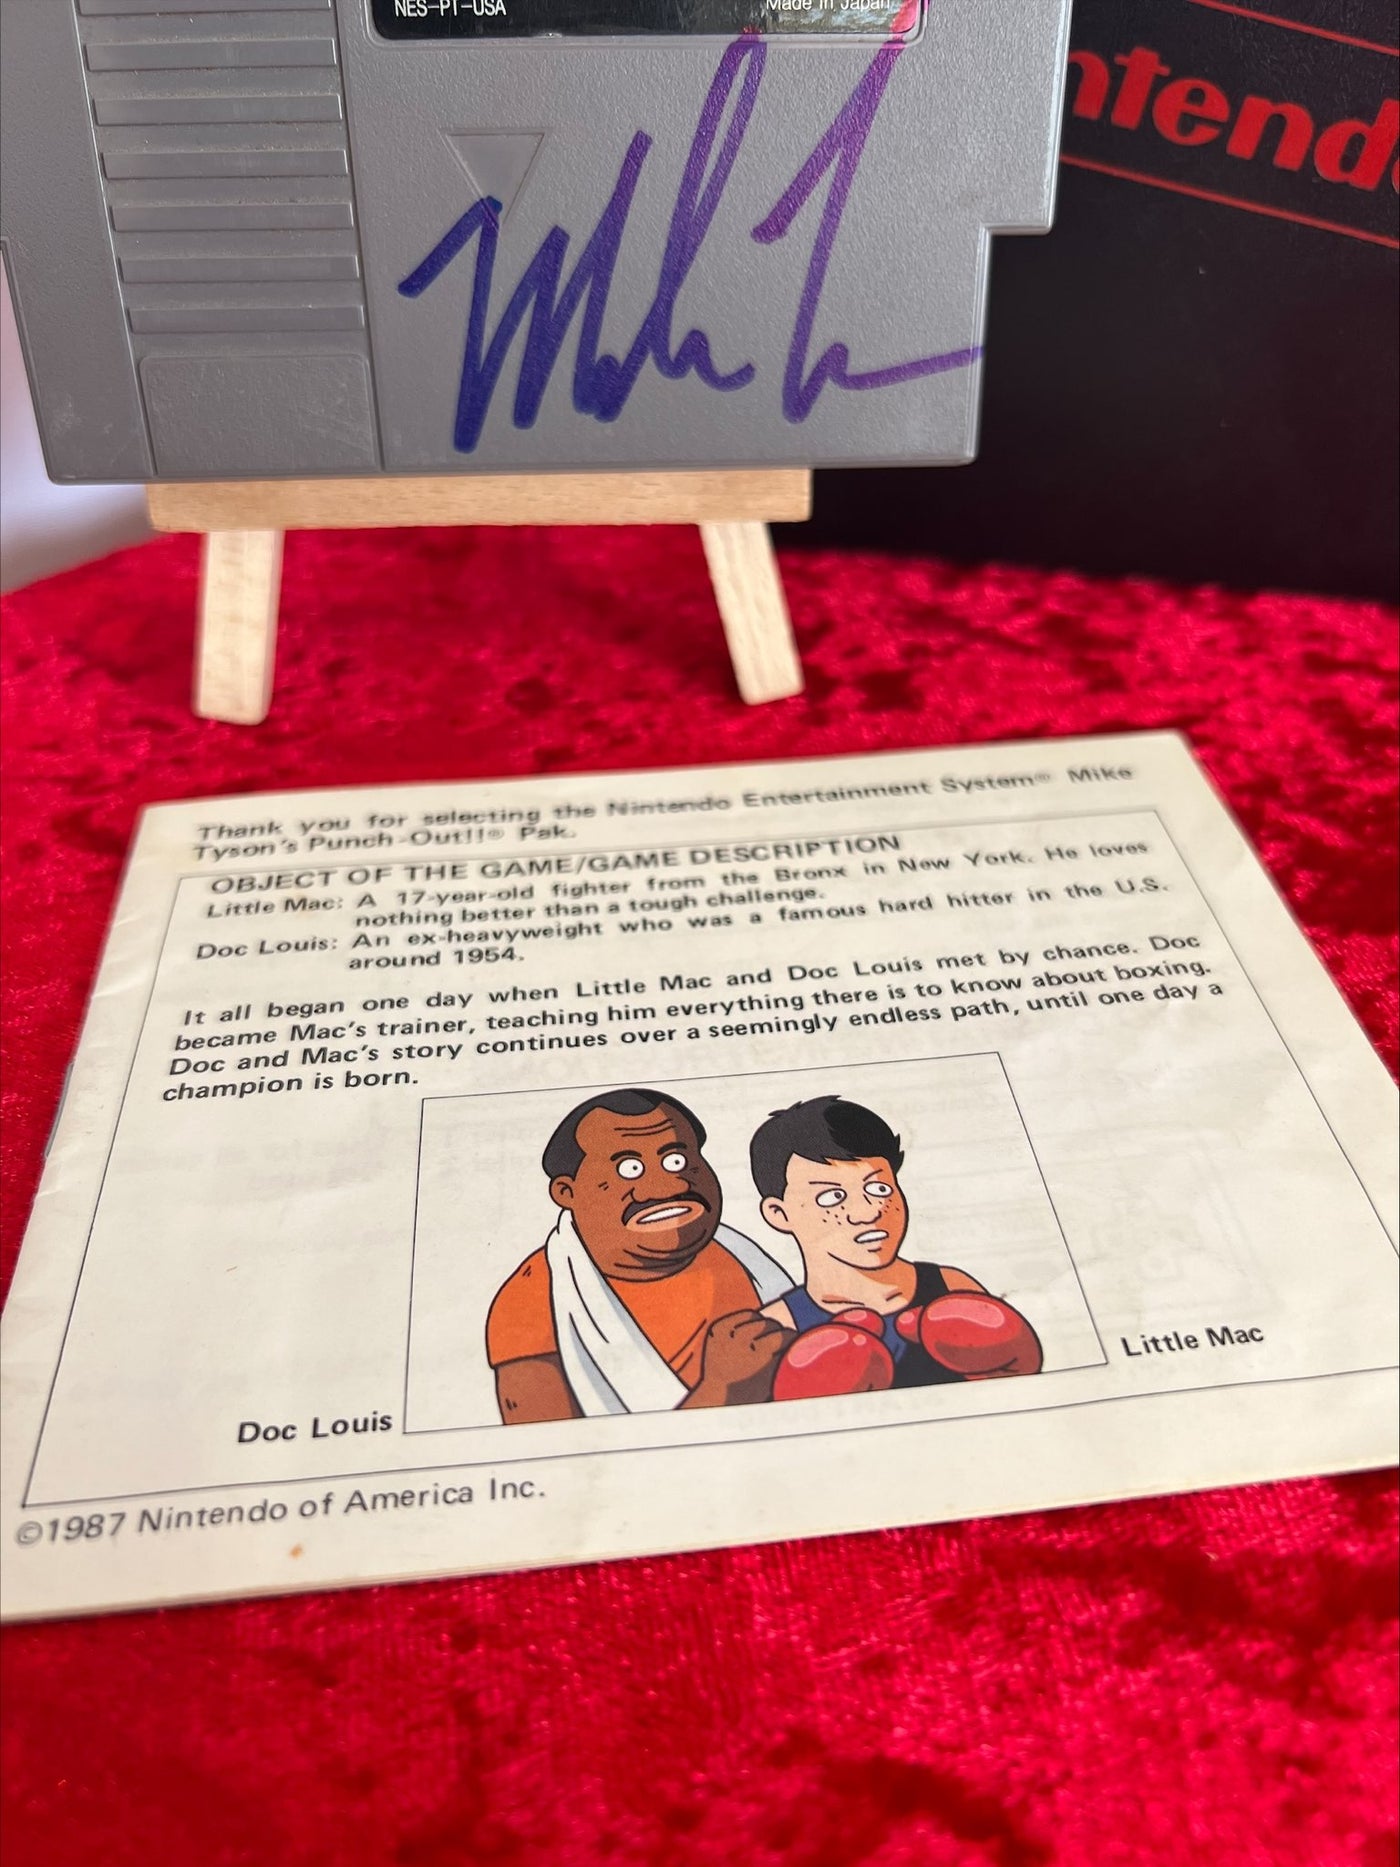 Mike Tyson Signed Original 1987 Punch Out Video Game Cartridge + Instruction booklet Original Case PSA COA RARE